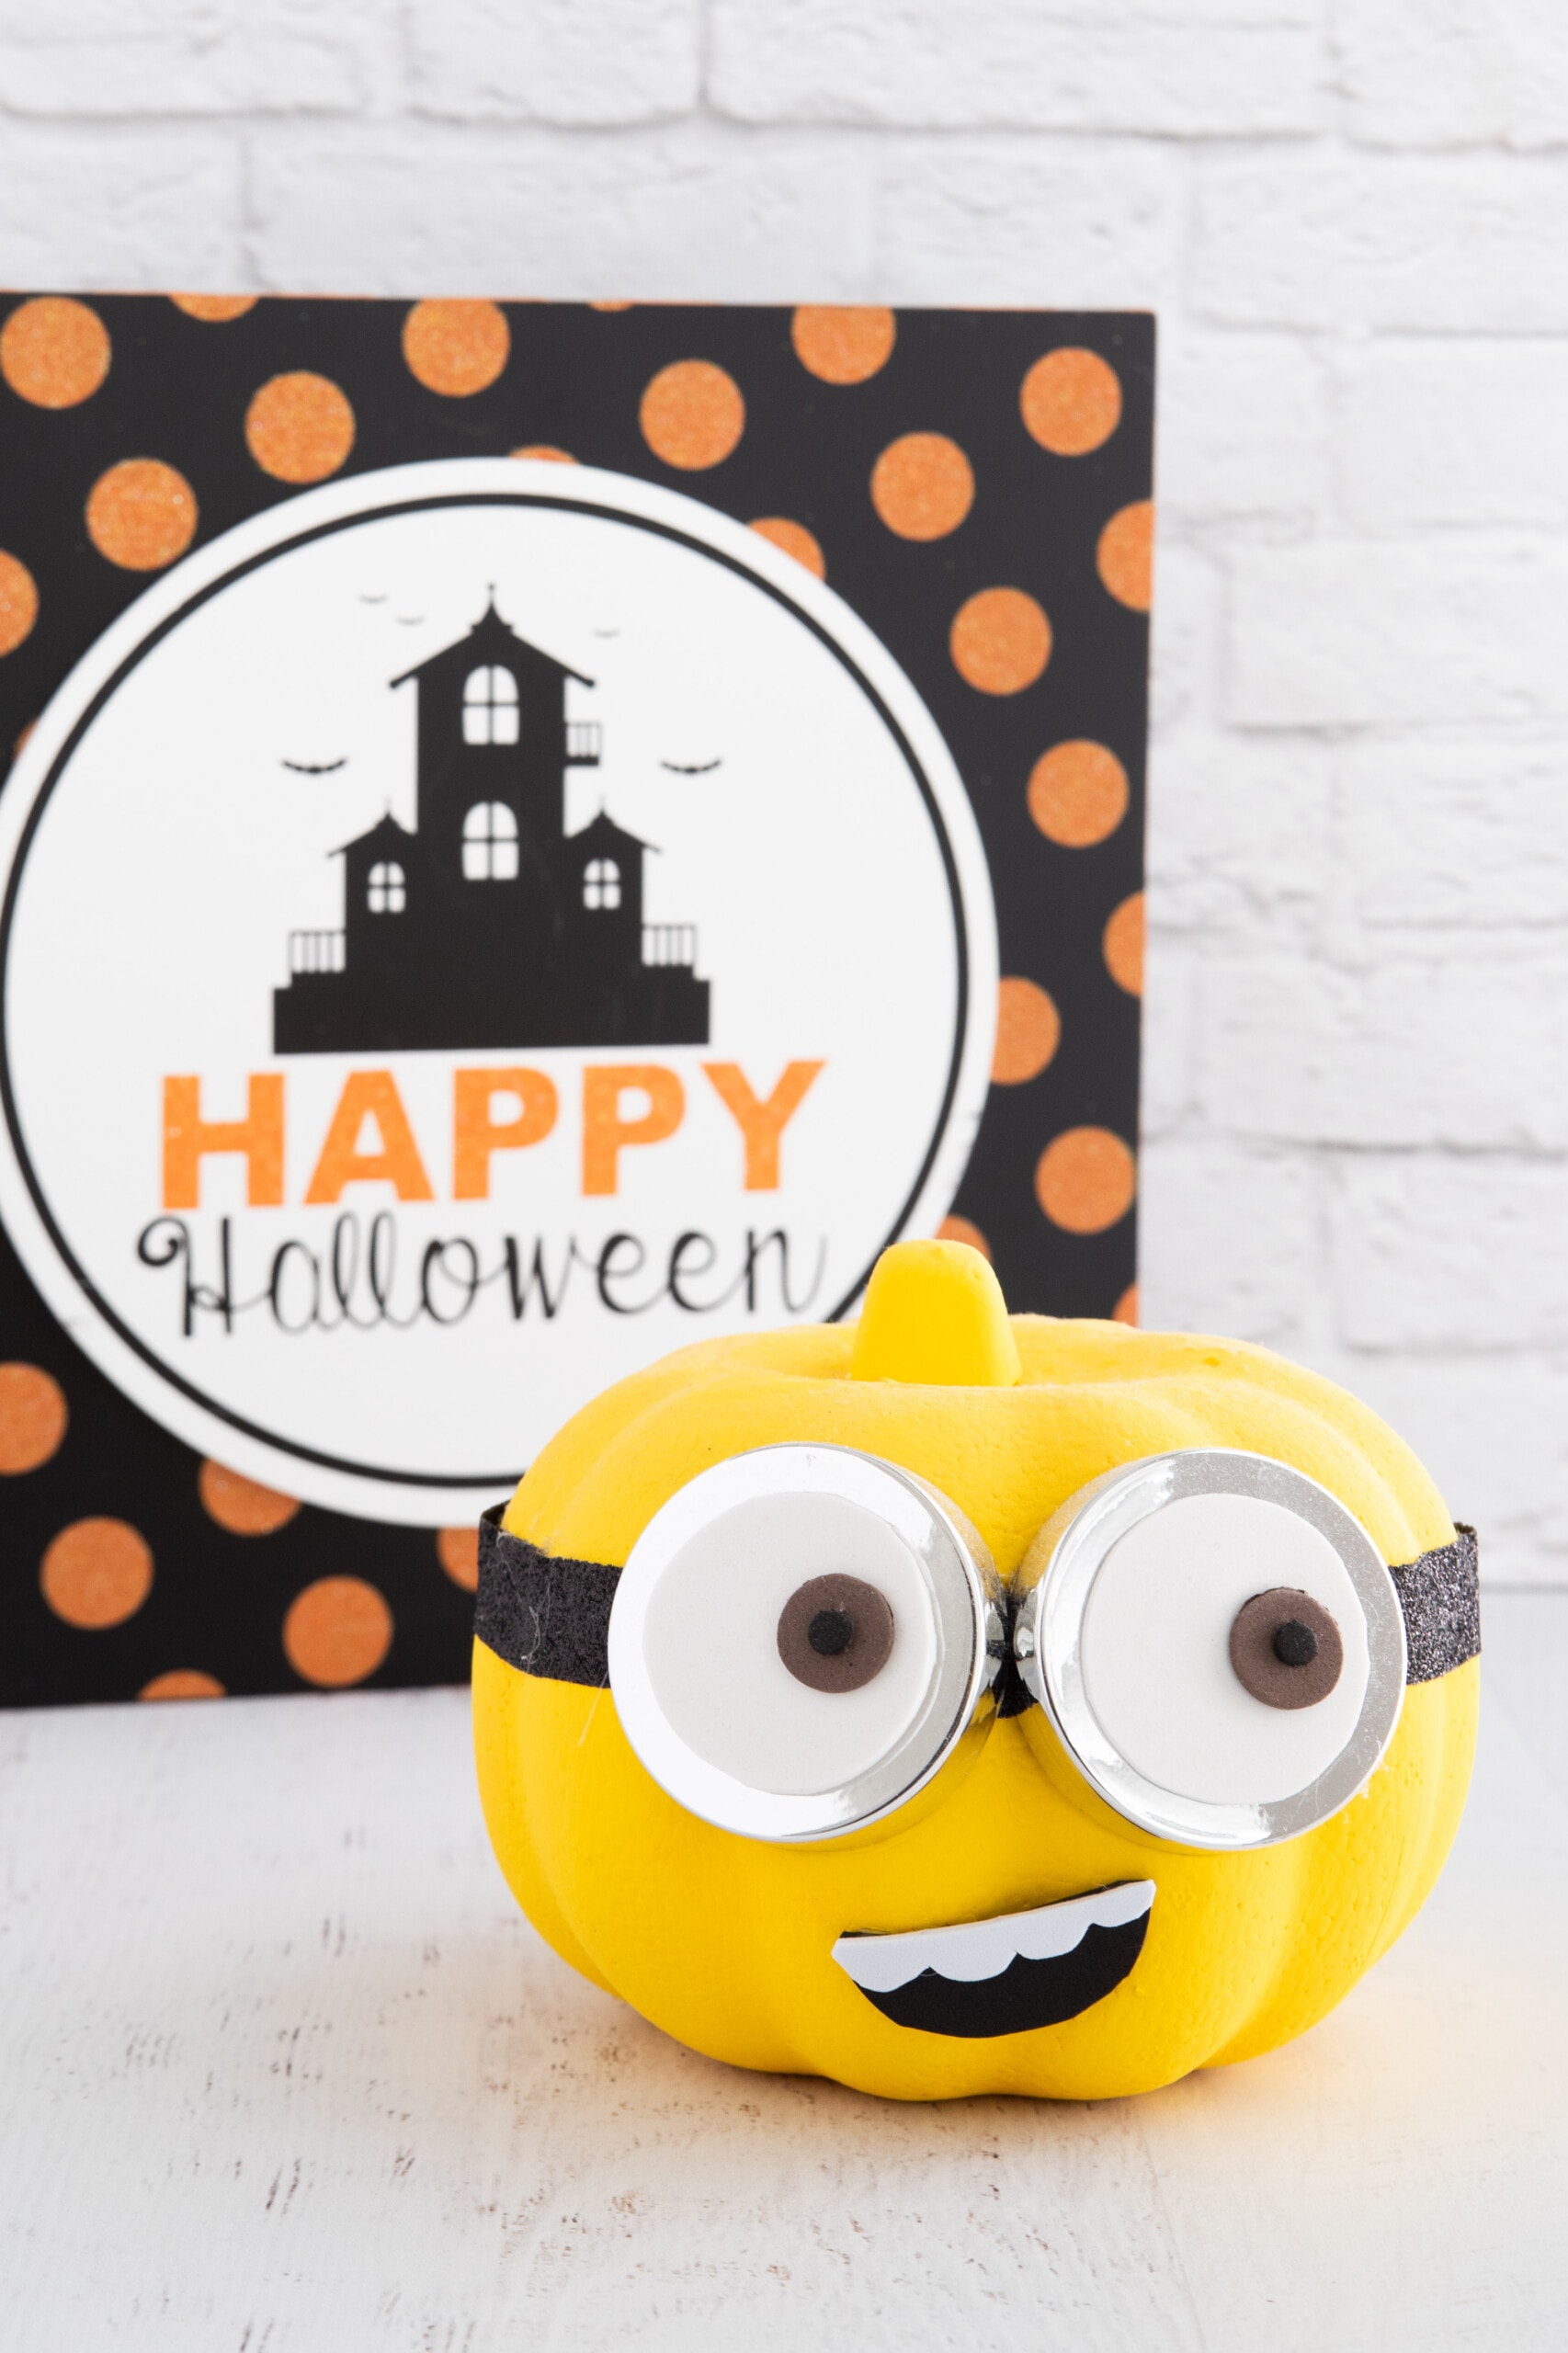 Minion pumpkin with Happy Halloween sign